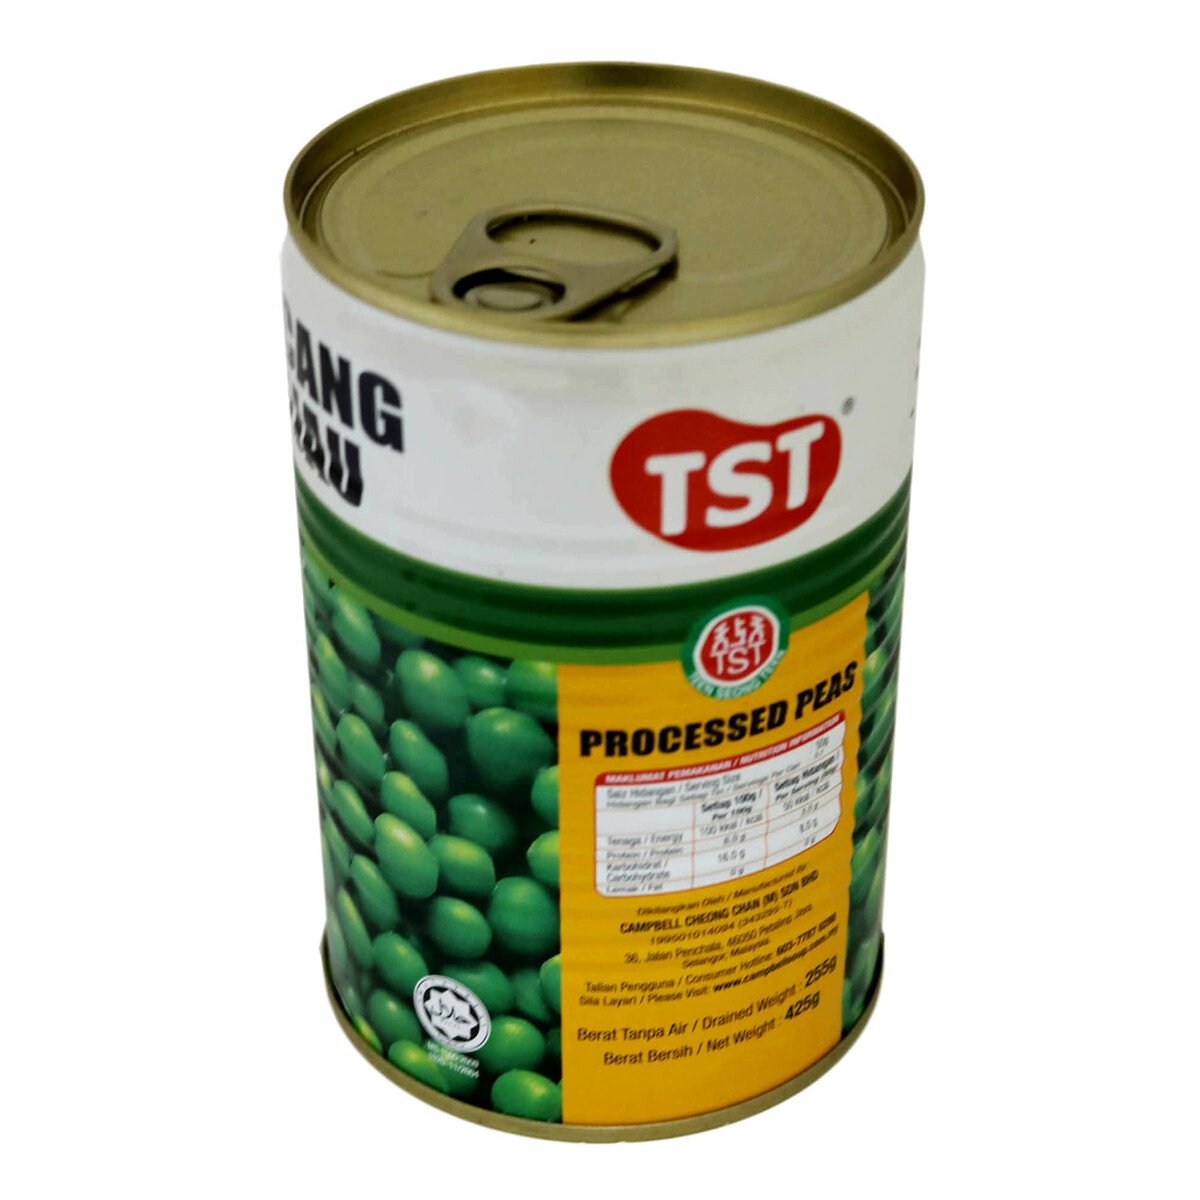 TST Processed Peas 425g